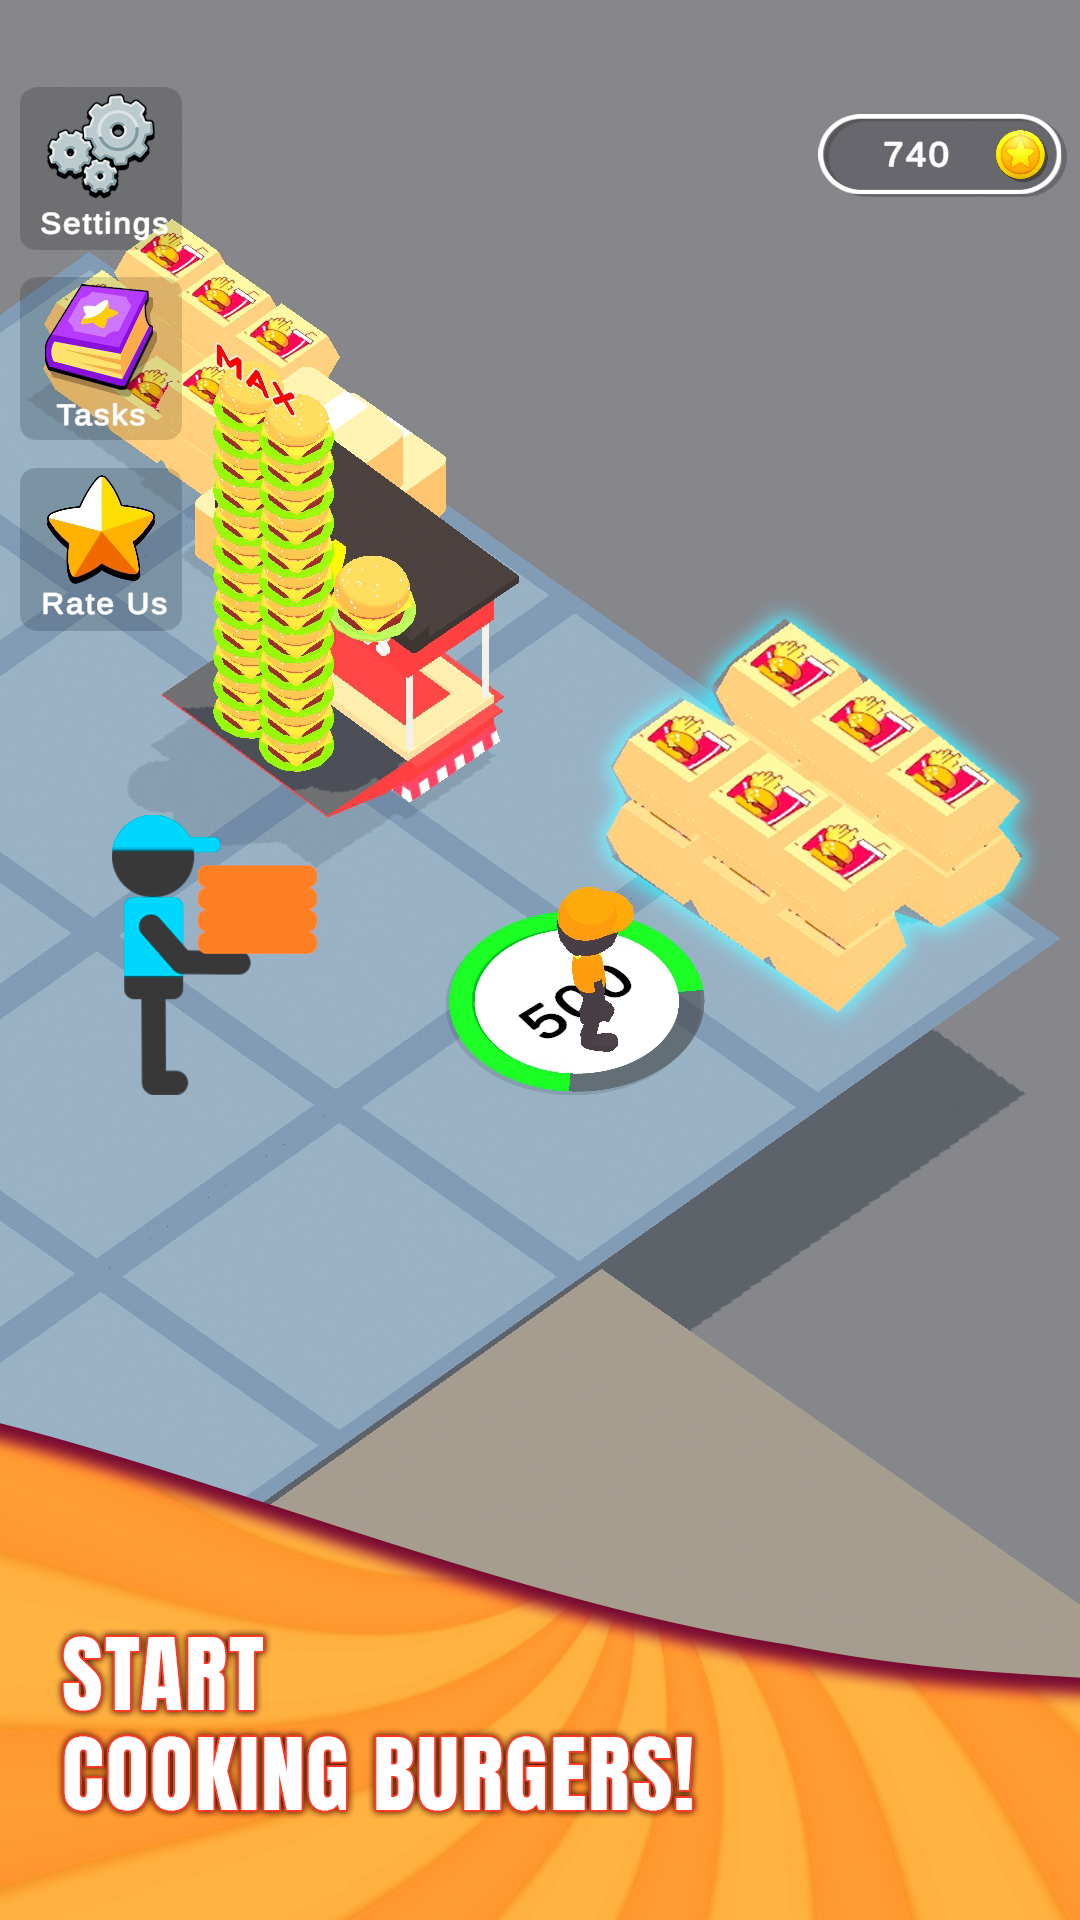 Idle Burger Clicker APK (Android Game) - Baixar Grátis